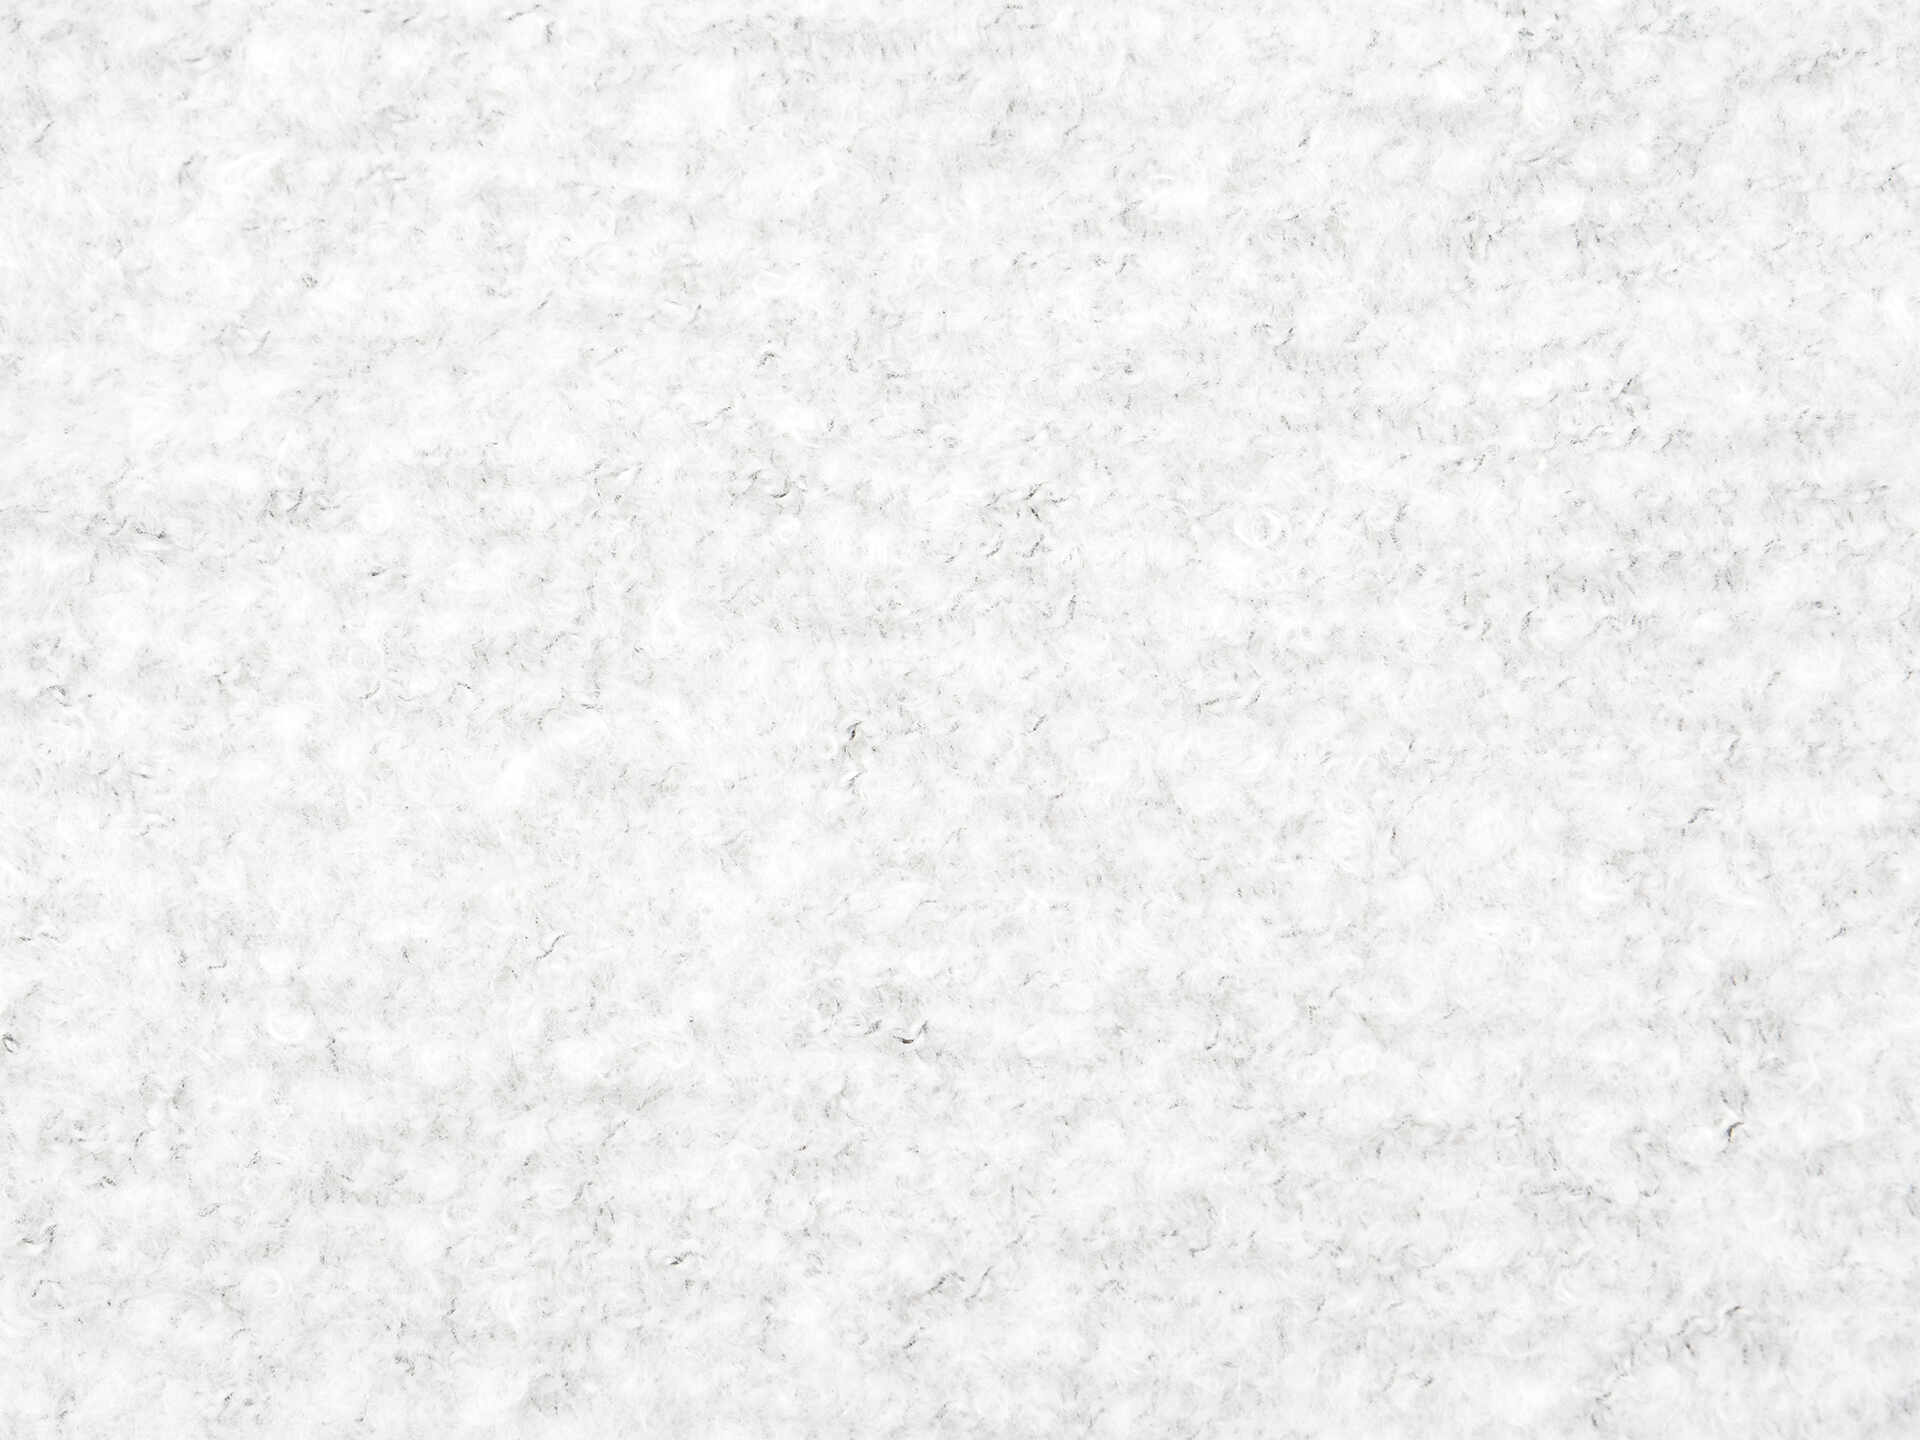 Esarfa ALDO alba, THIADAN102, din material textil